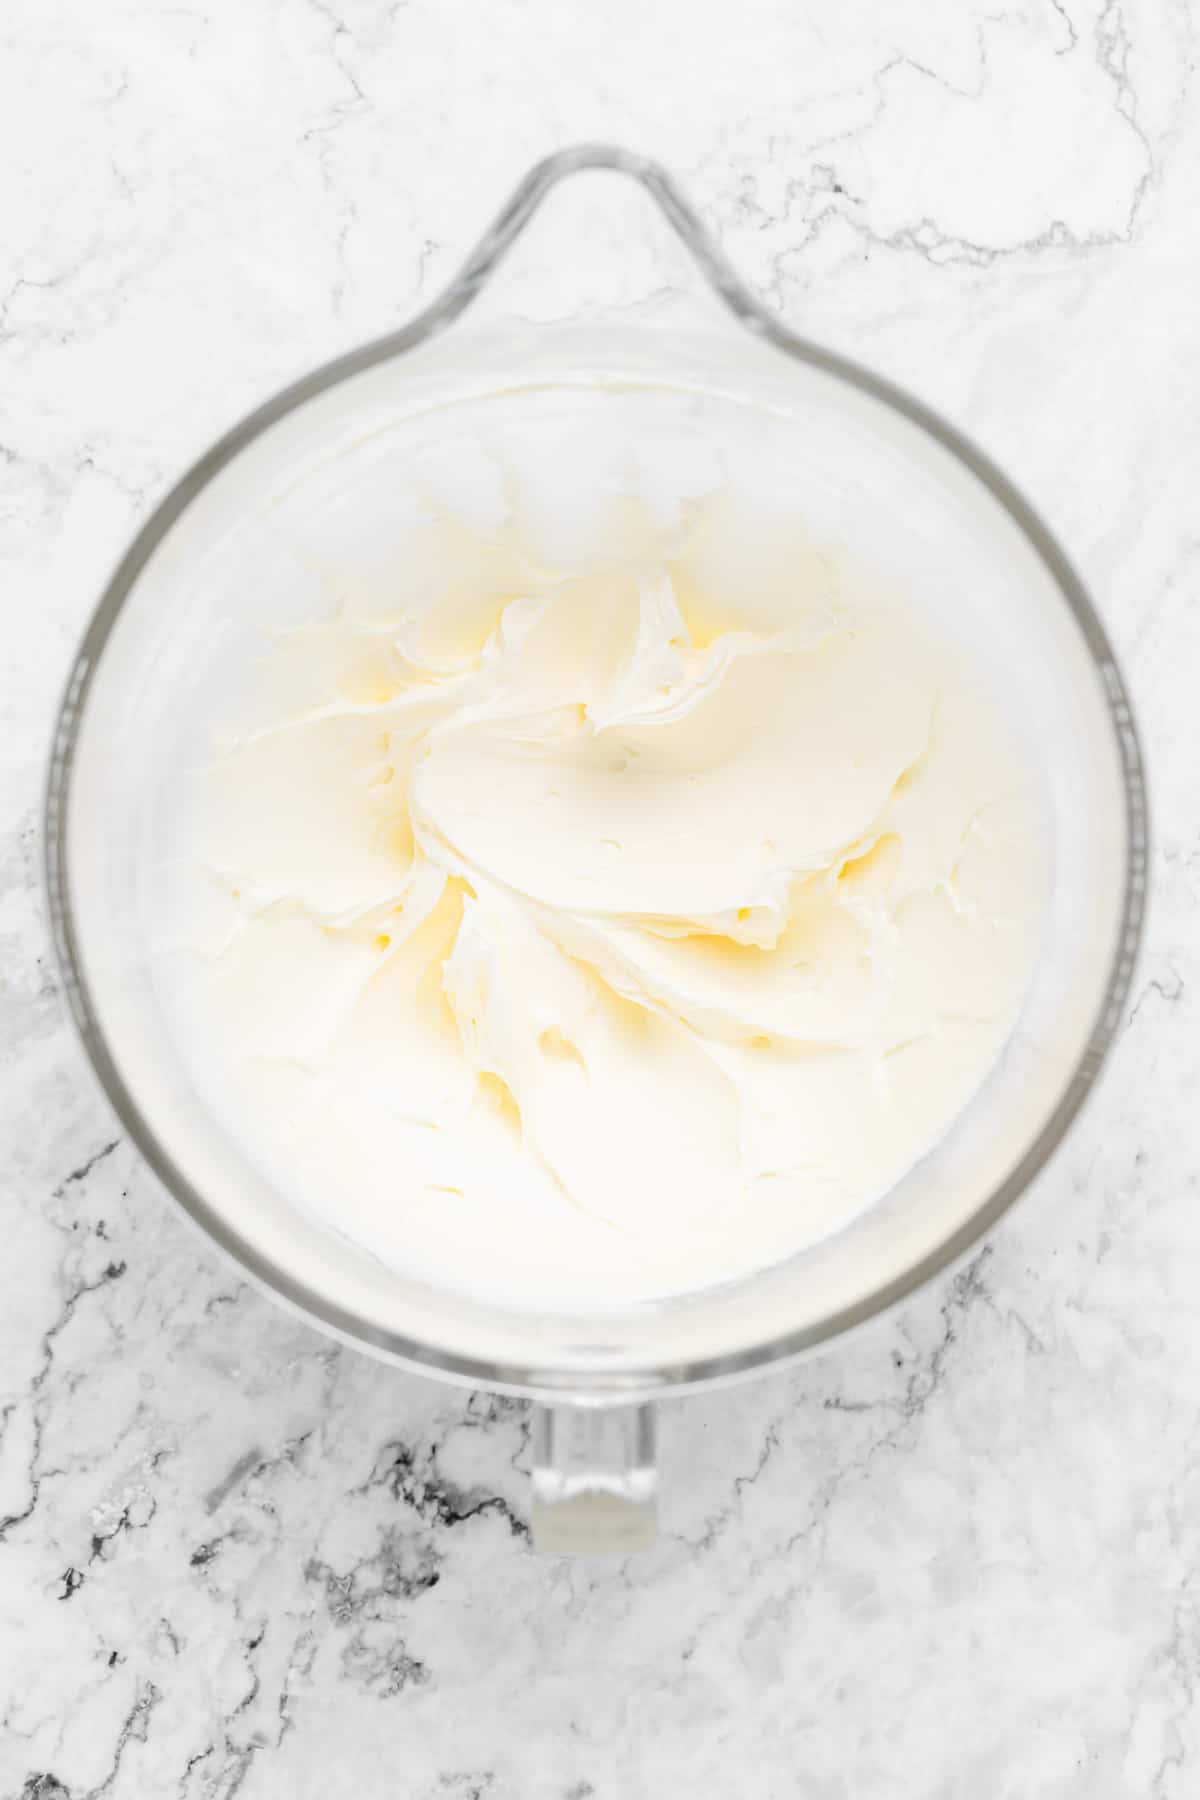 Beaten butter and vanilla.